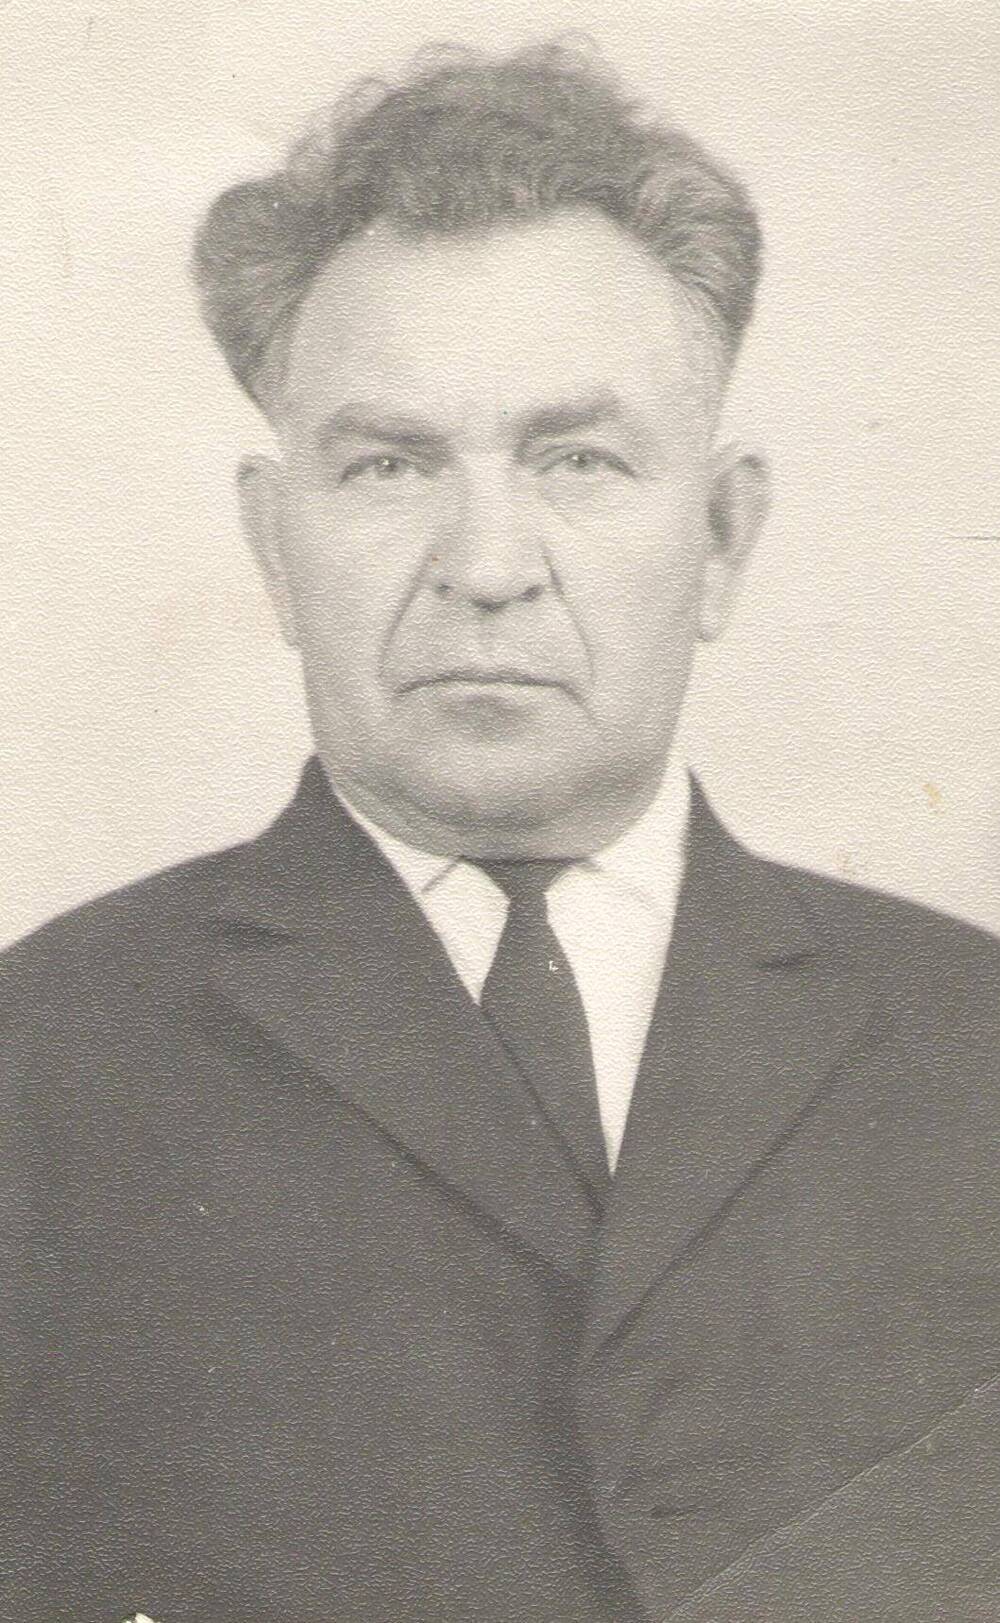 Фото – Долгушин Николай Васильевич, участник ВОВ с июня 1942 по август 1946